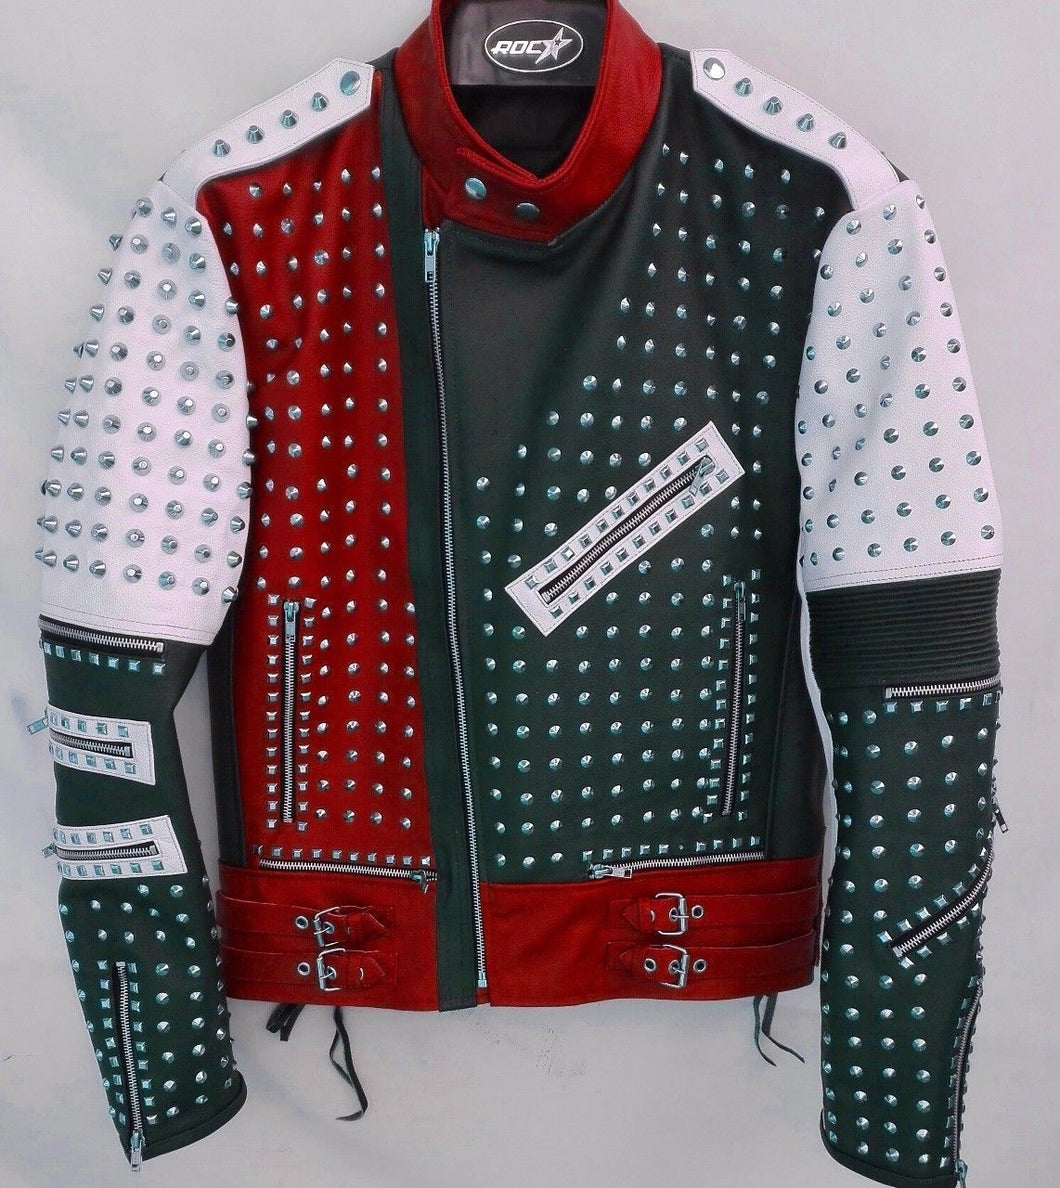 Multi Color Biker Studded Leather Coat Jacket with Adjustable Waist Belted Strap - Shearling leather